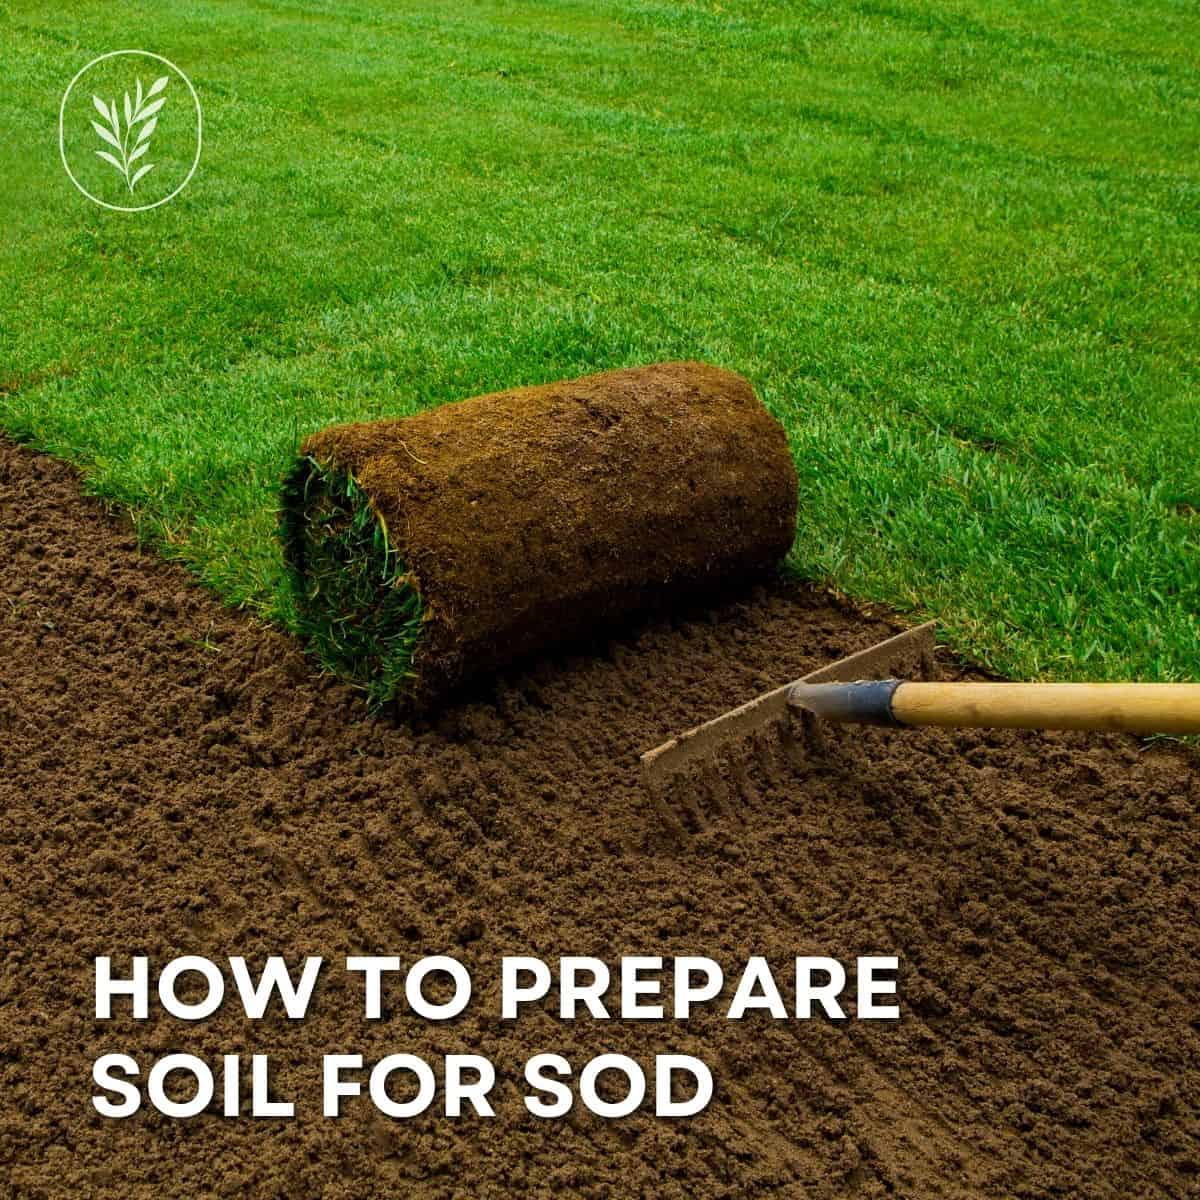 How to prepare soil for sod via @home4theharvest